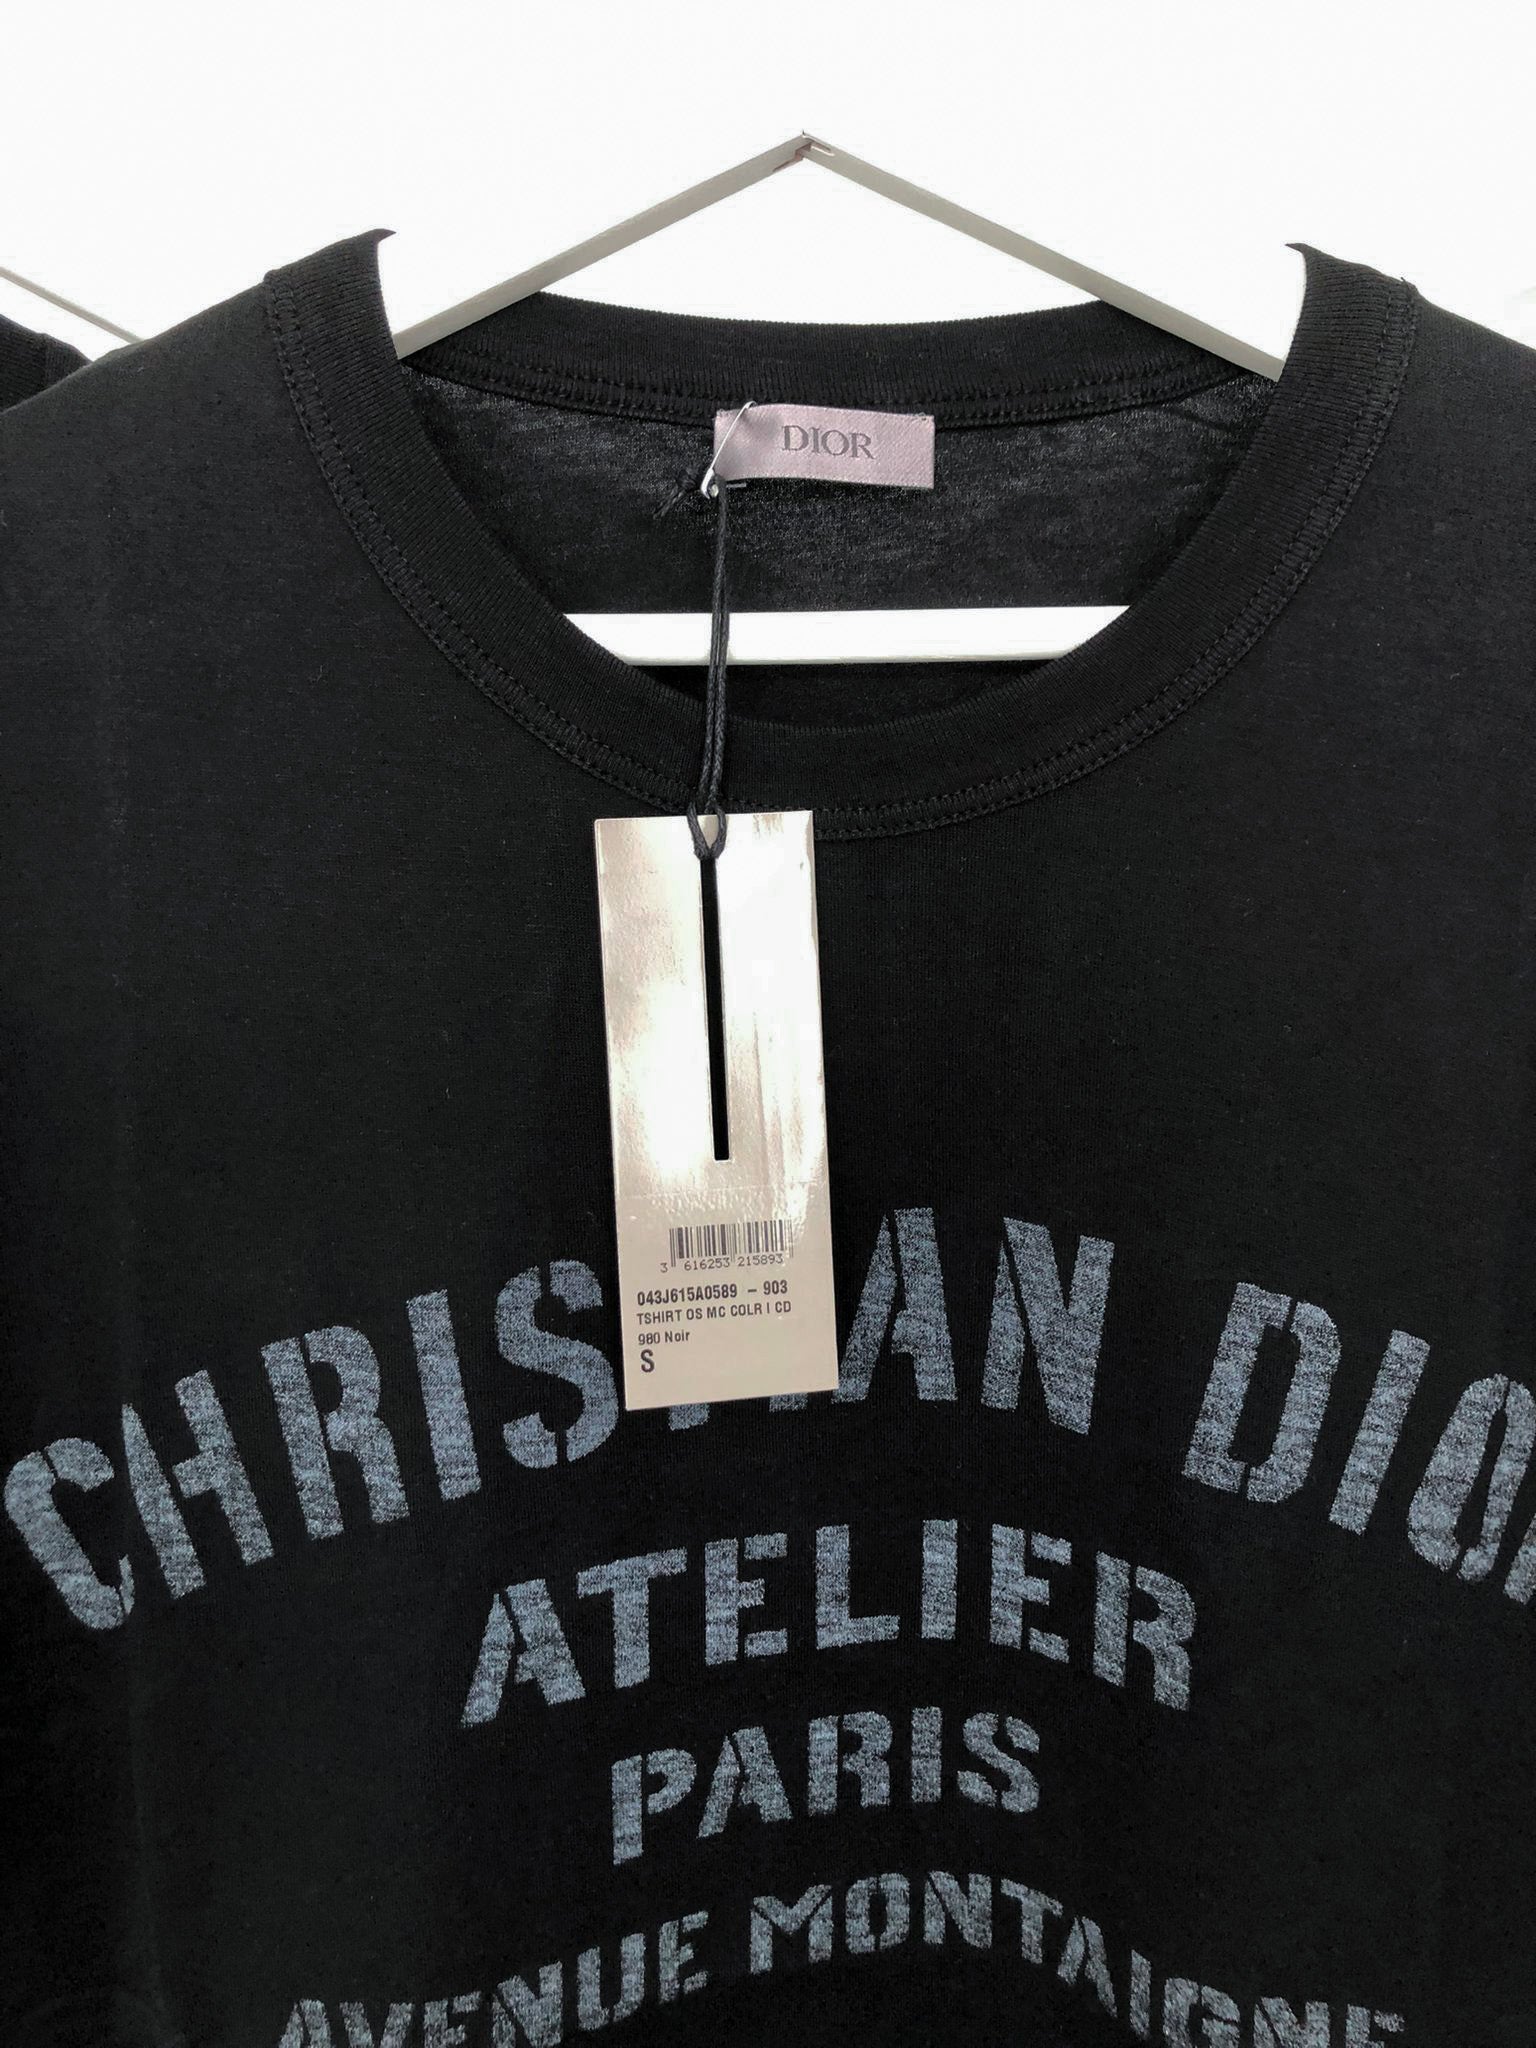 Christian Dior Atelier Logo Tee